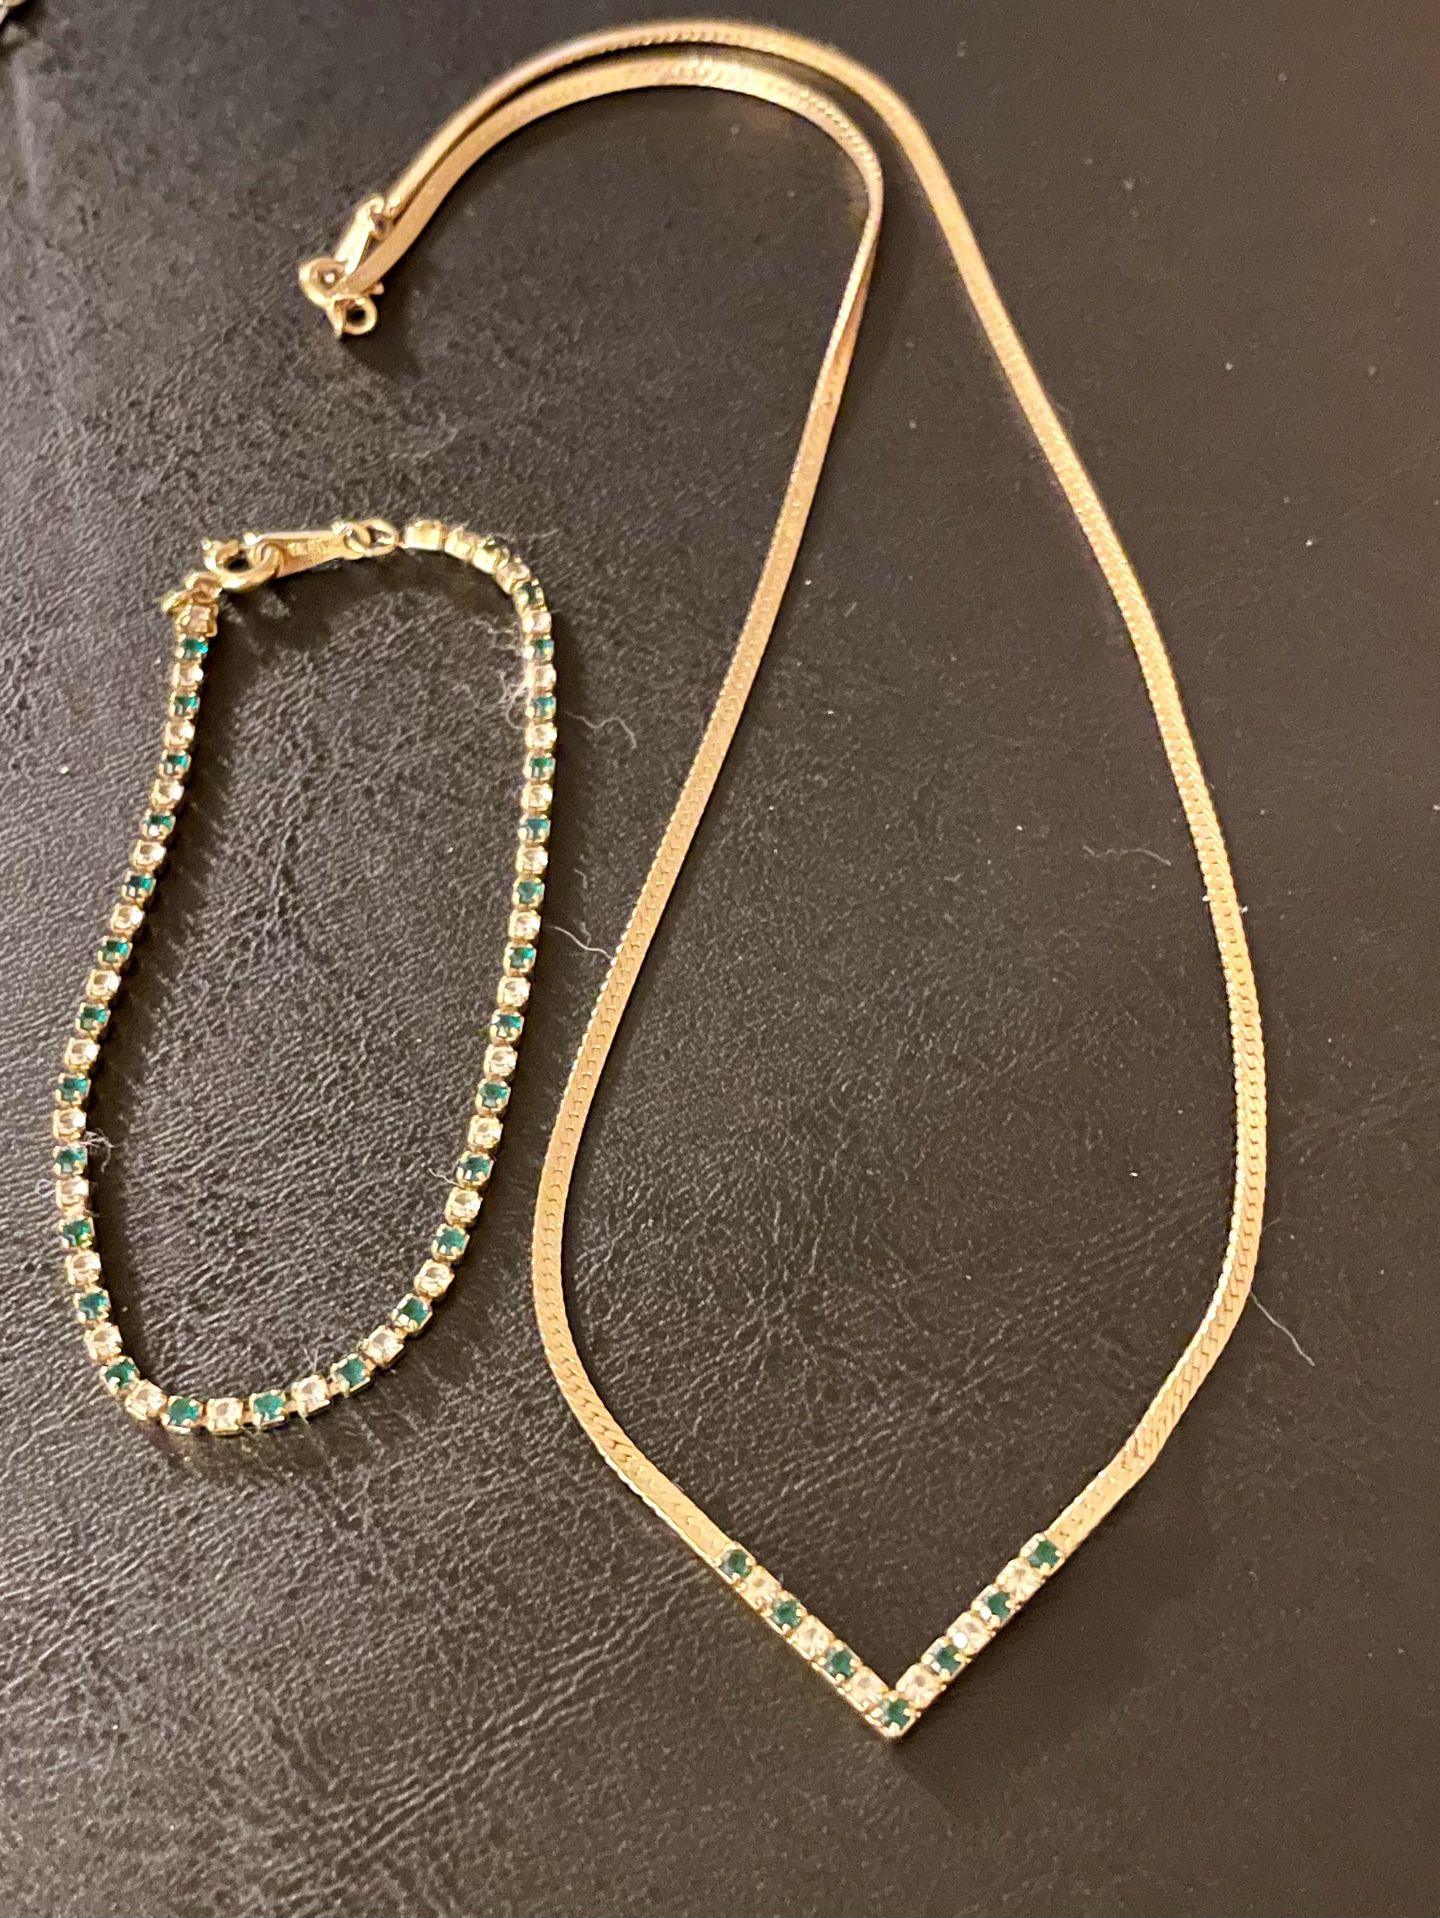 Emerald Necklace And Bracelet 